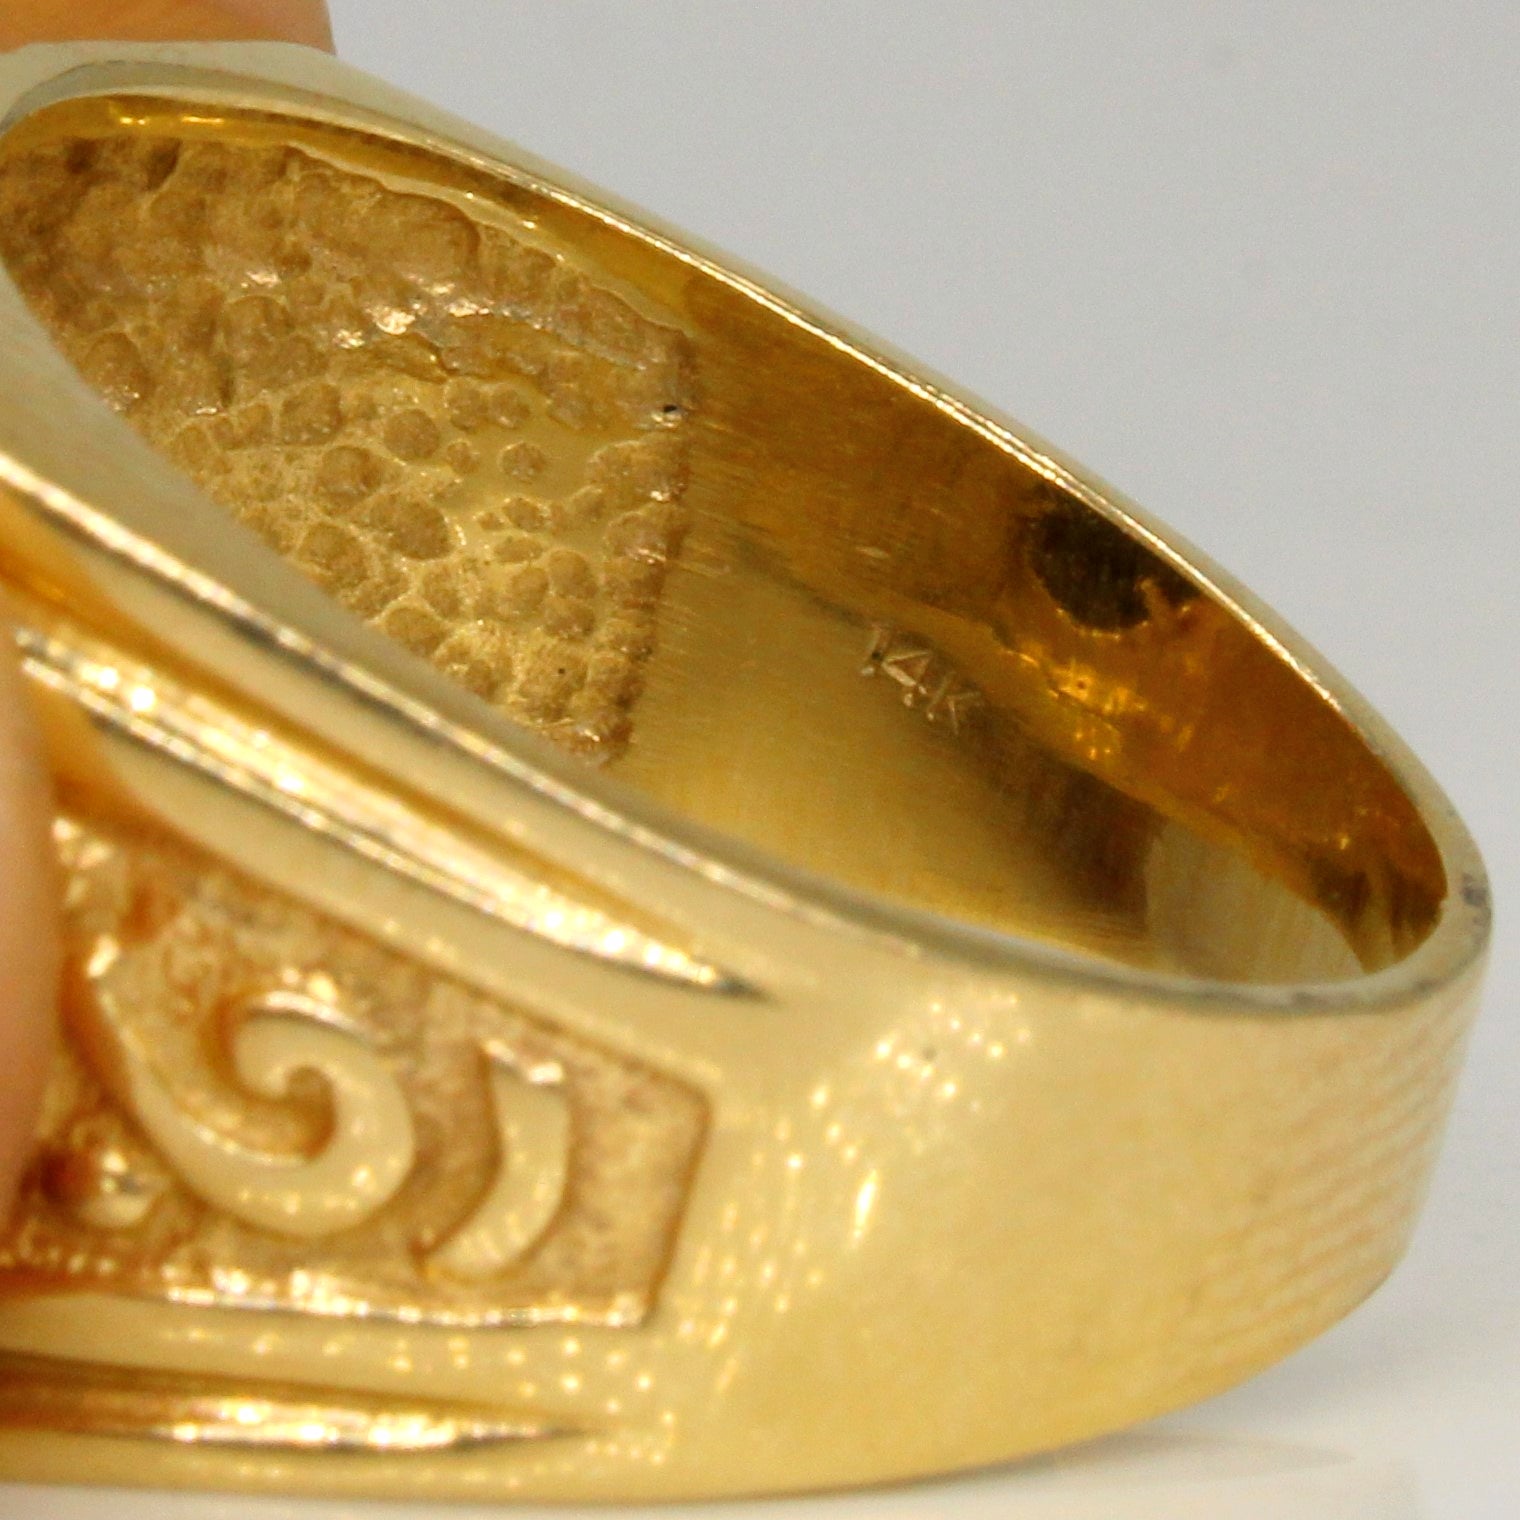 Bezel Set Ammolite Ring with Carved Detailing | 0.75ct | SZ 8.25 |